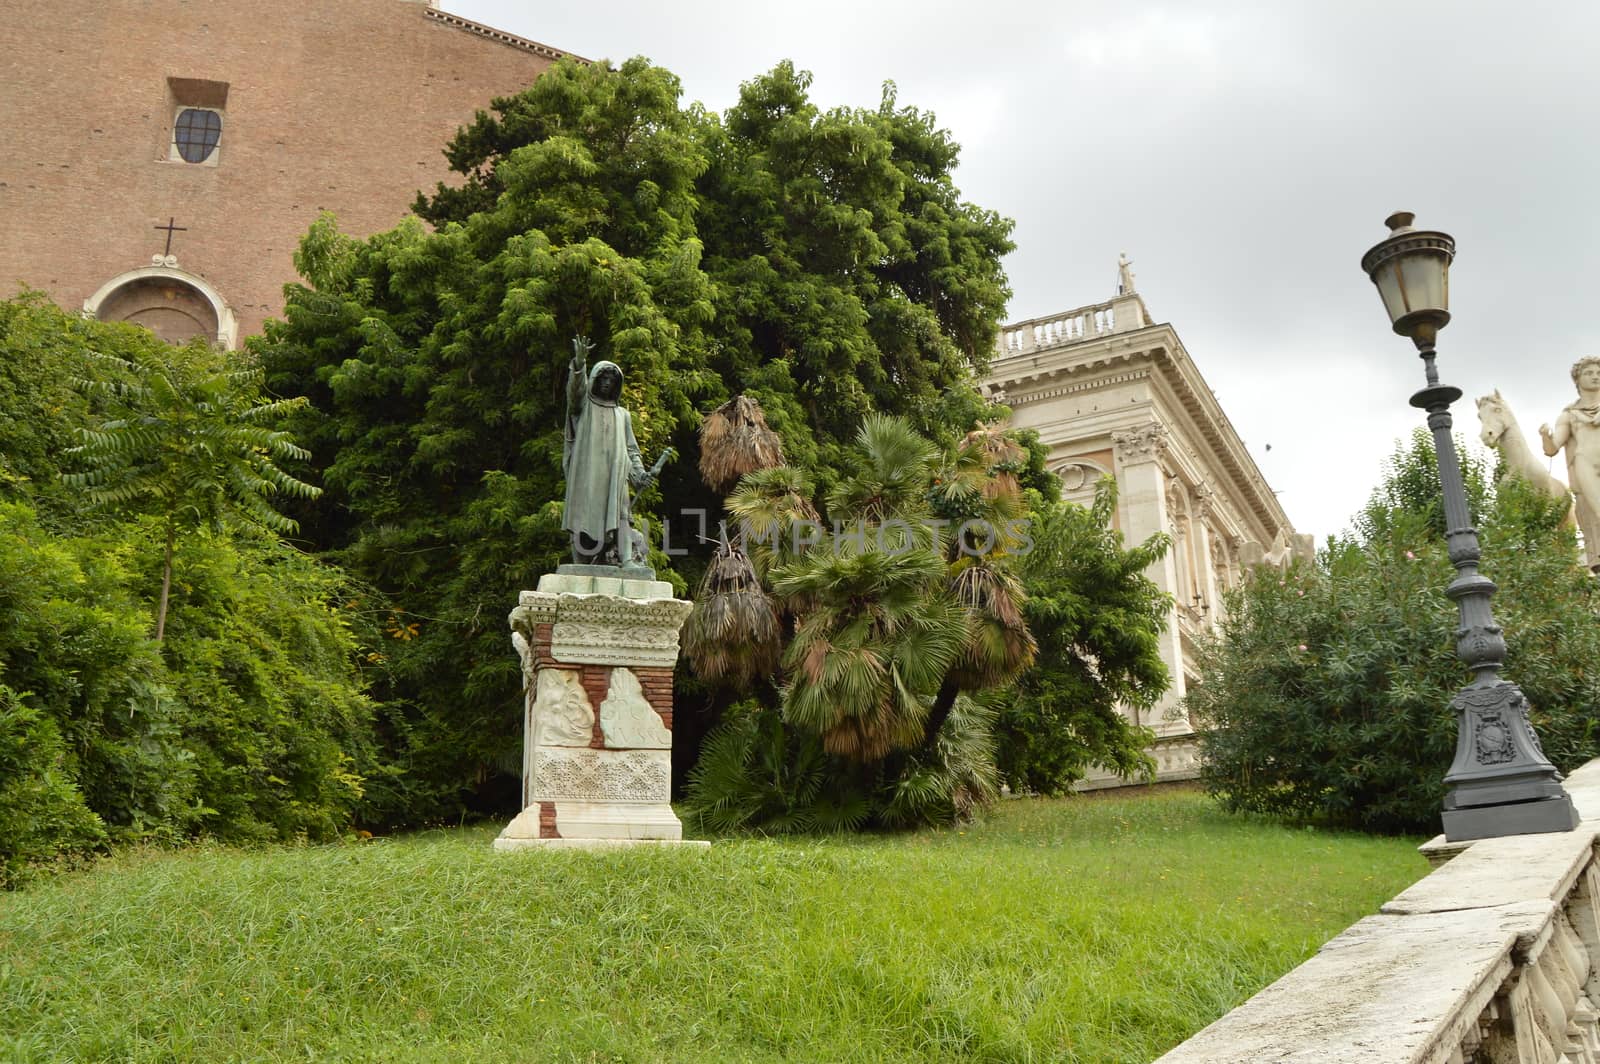 Statue of Cola di Rienzo and the facade of the Church Santa Maria in Aracoeli on the Capitoline hill, Rome, Italy 07 Oct 2018.